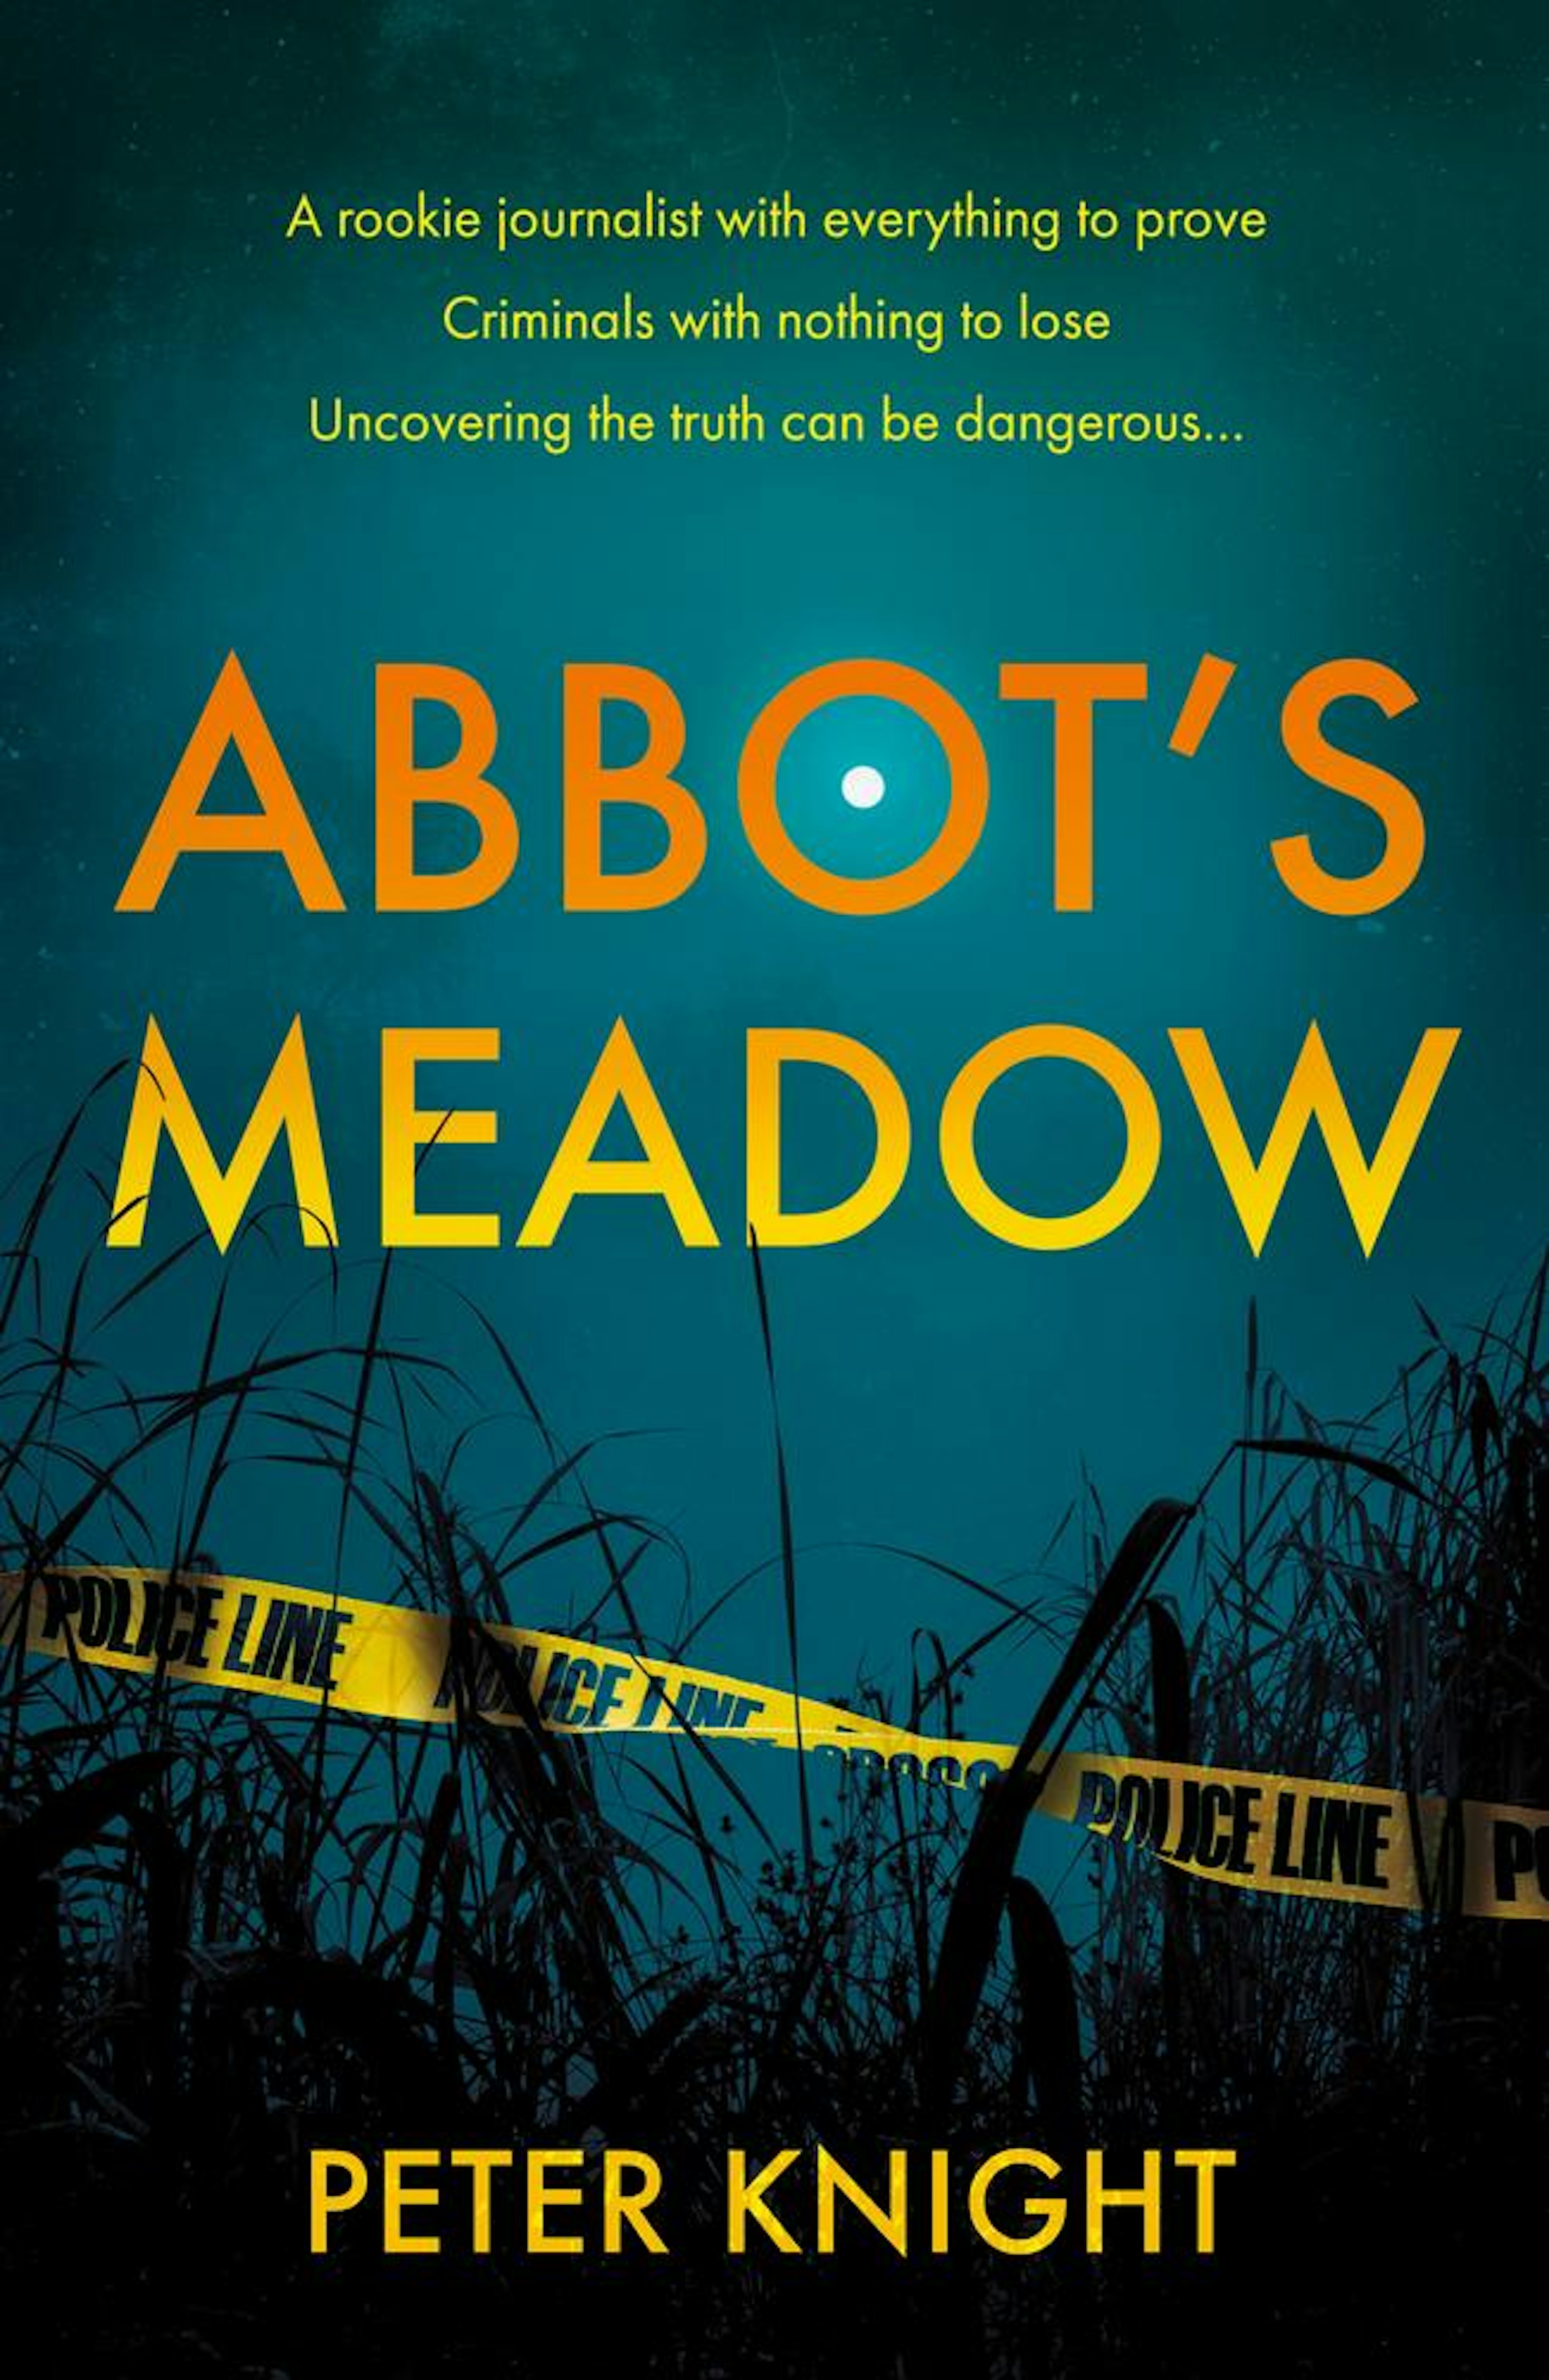 Abbot's Meadow